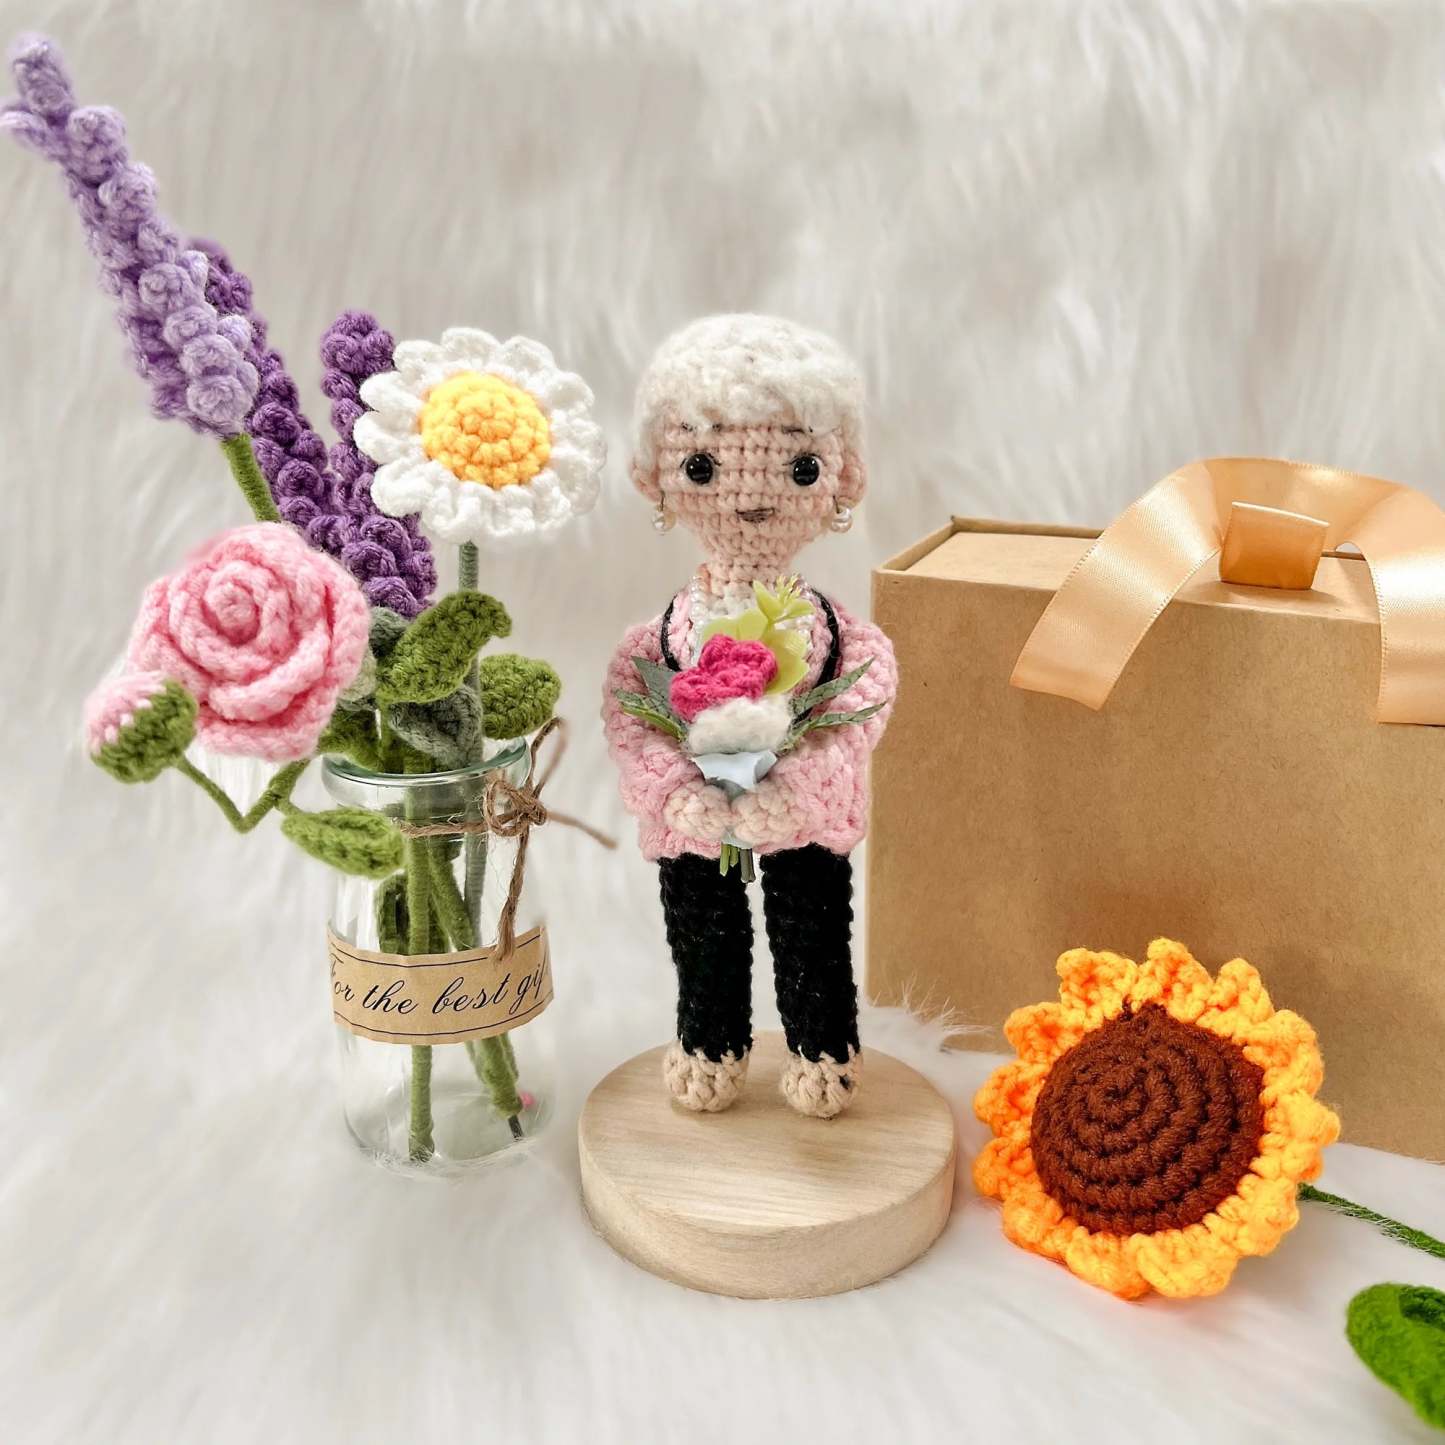 Grandparents' Day Gift Crochet Doll Personalized Portrait Crochet Look Alike Doll -